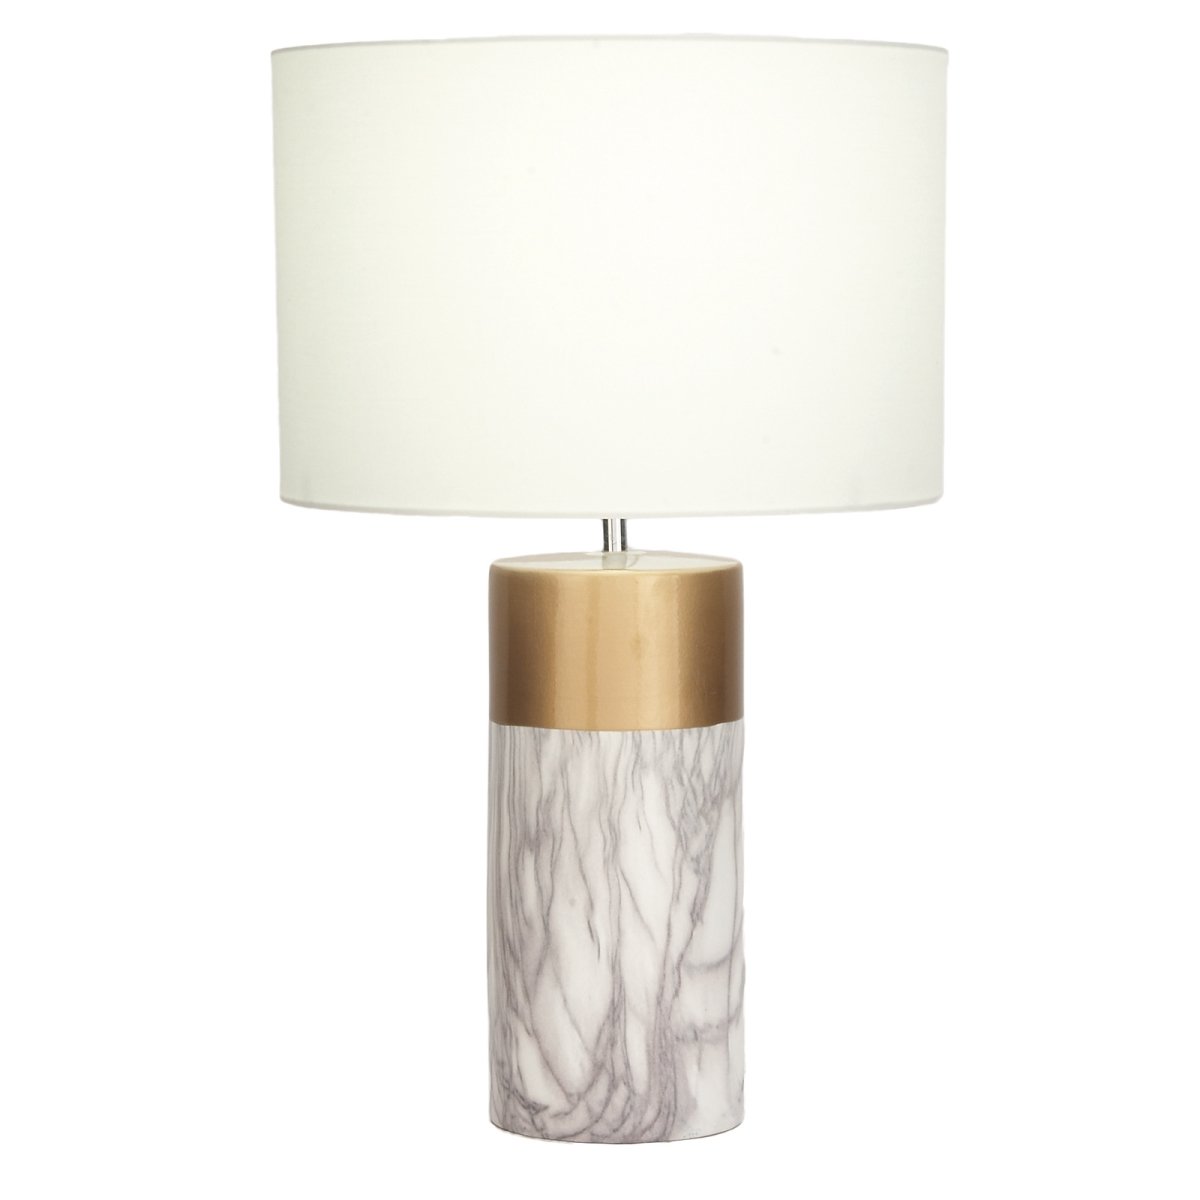 Urban Designs 7793706 24 In. White & Gold Column Ceramic Table Lamp